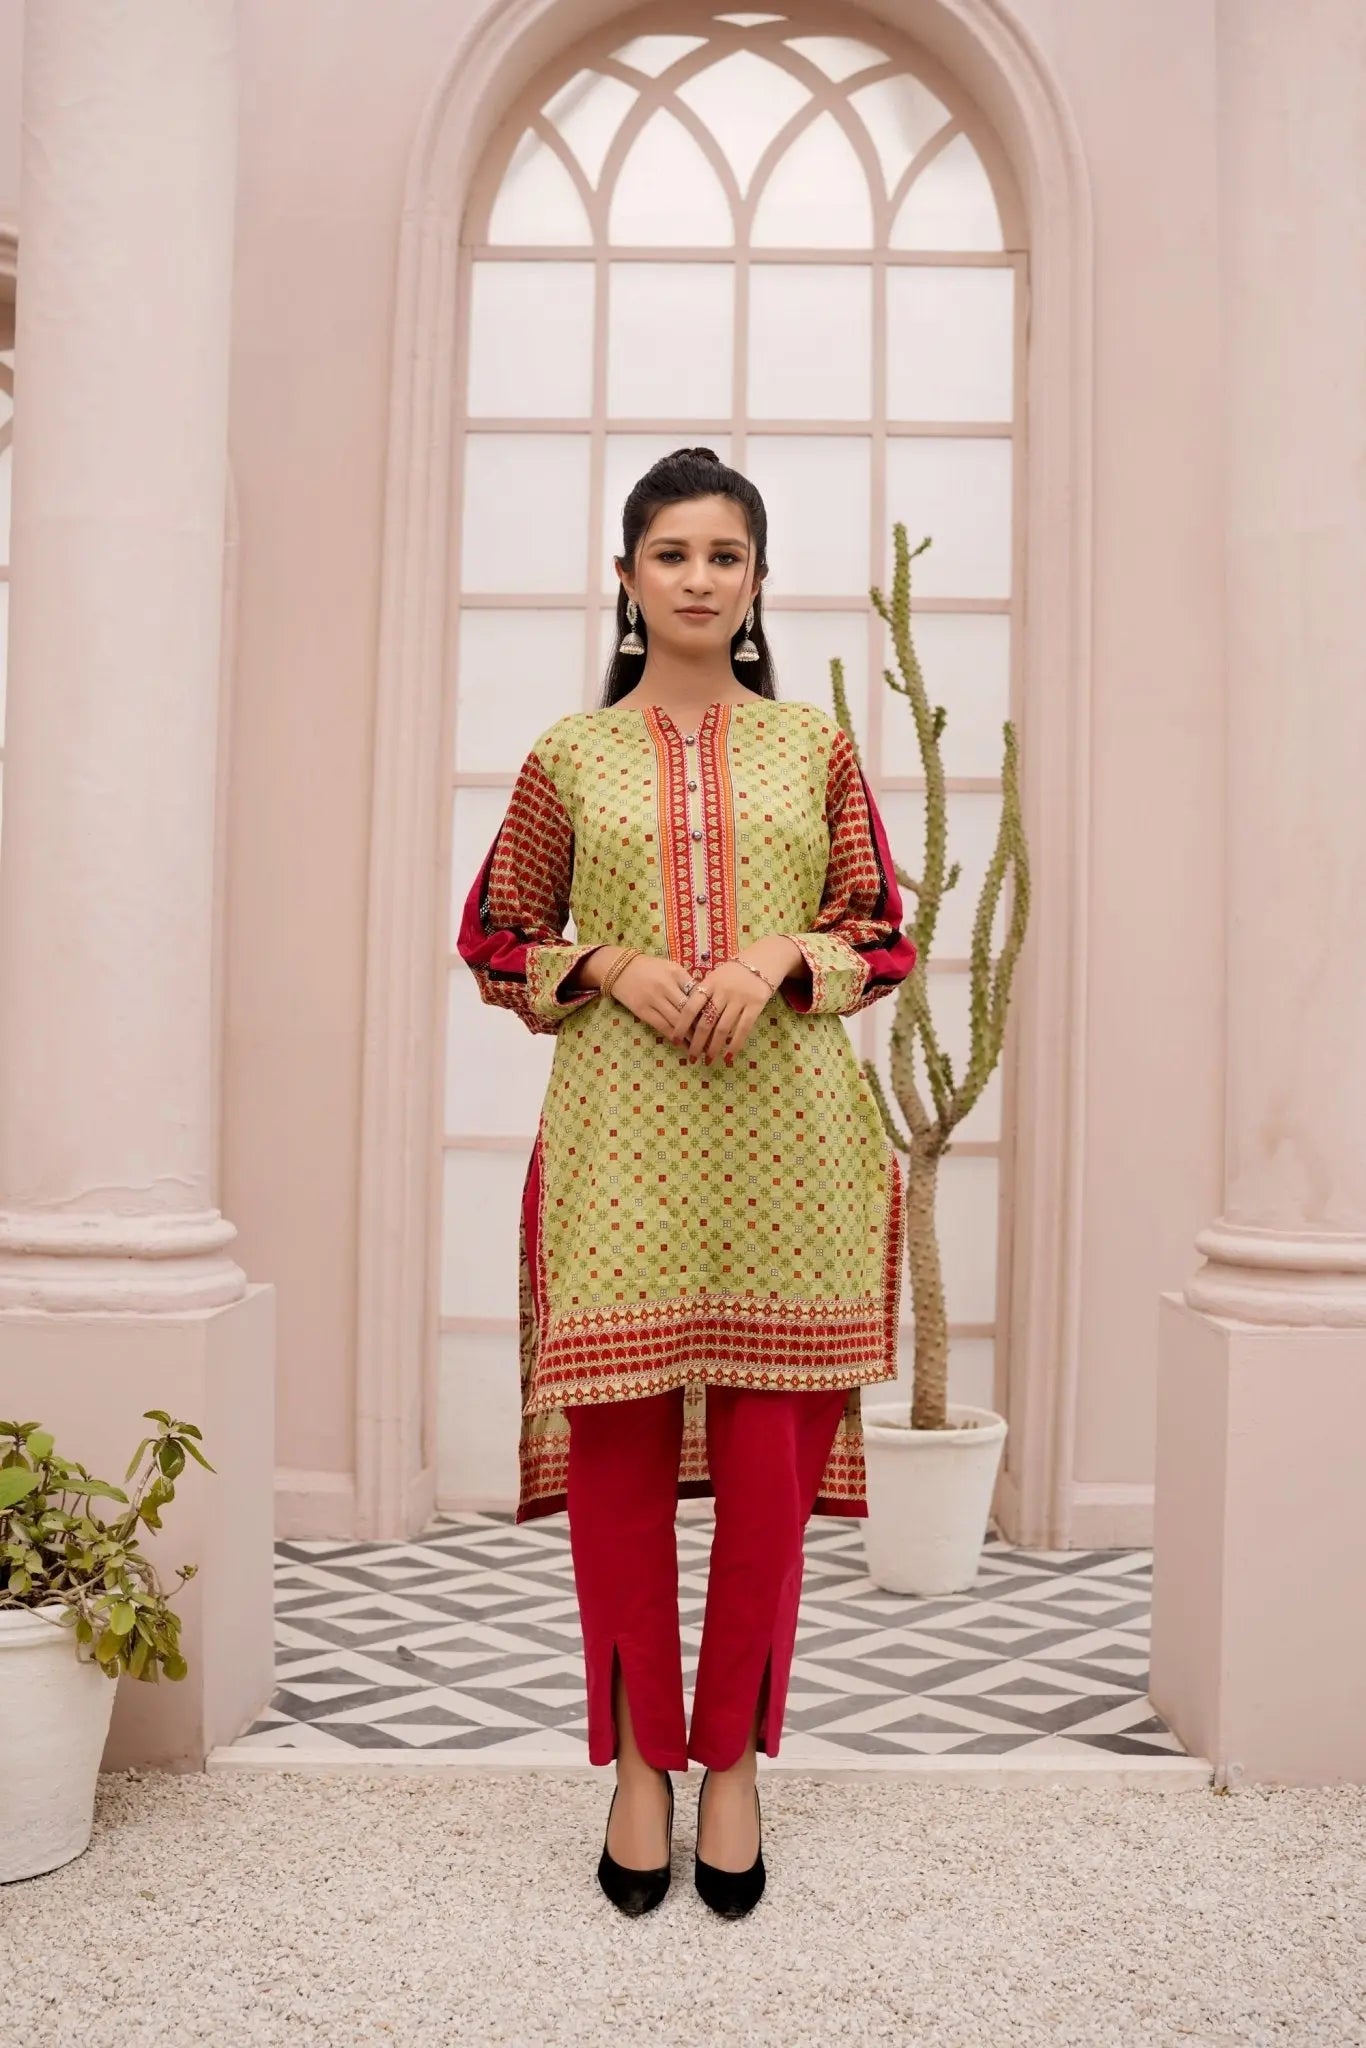 IshDeena Indian Kurta Set for Women: Cotton Fabric, Casual & Festive, 2-Piece Printed Kurta, Office Wear Plus Size M-3XL - IshDeena